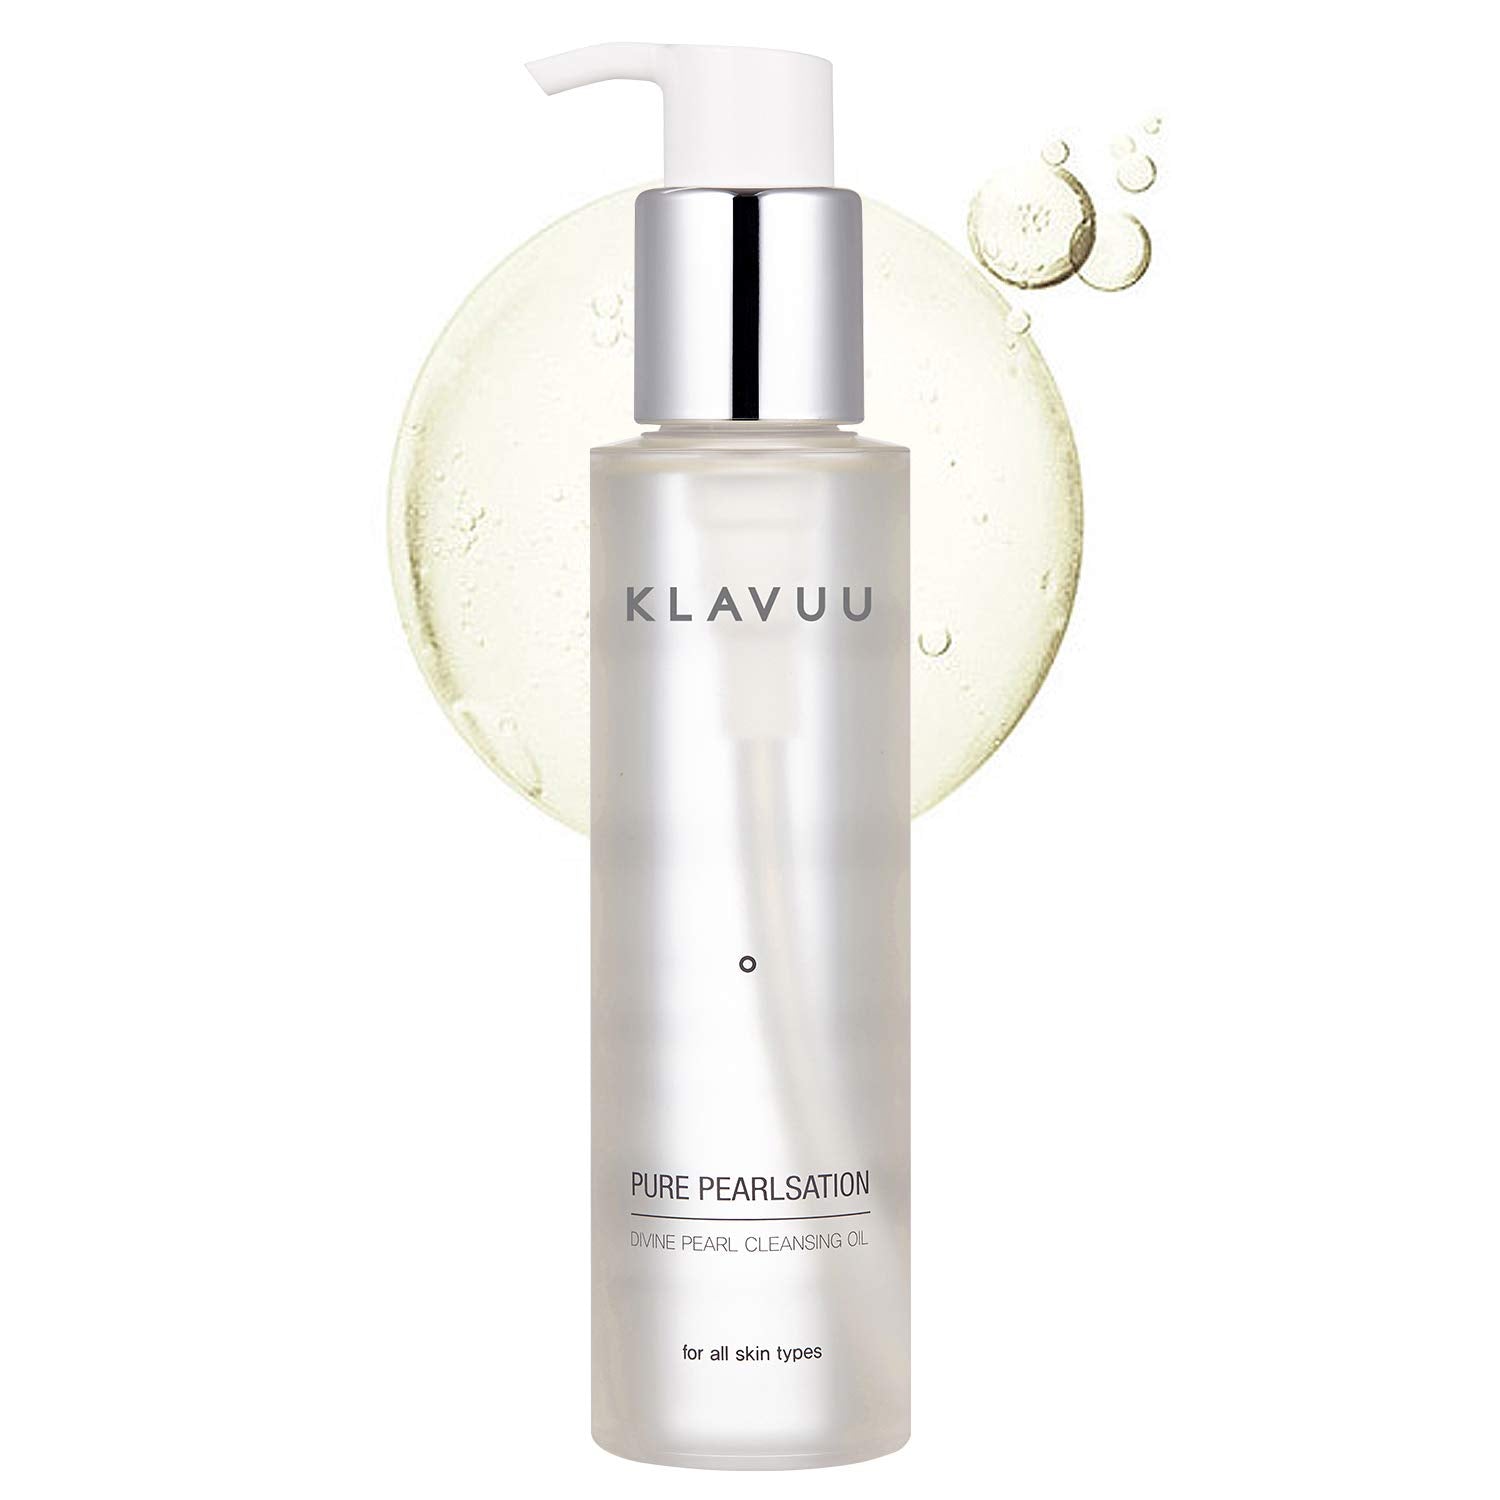 KLAVUU - Pure Pearlsation Divine Pearl Cleansing Oil